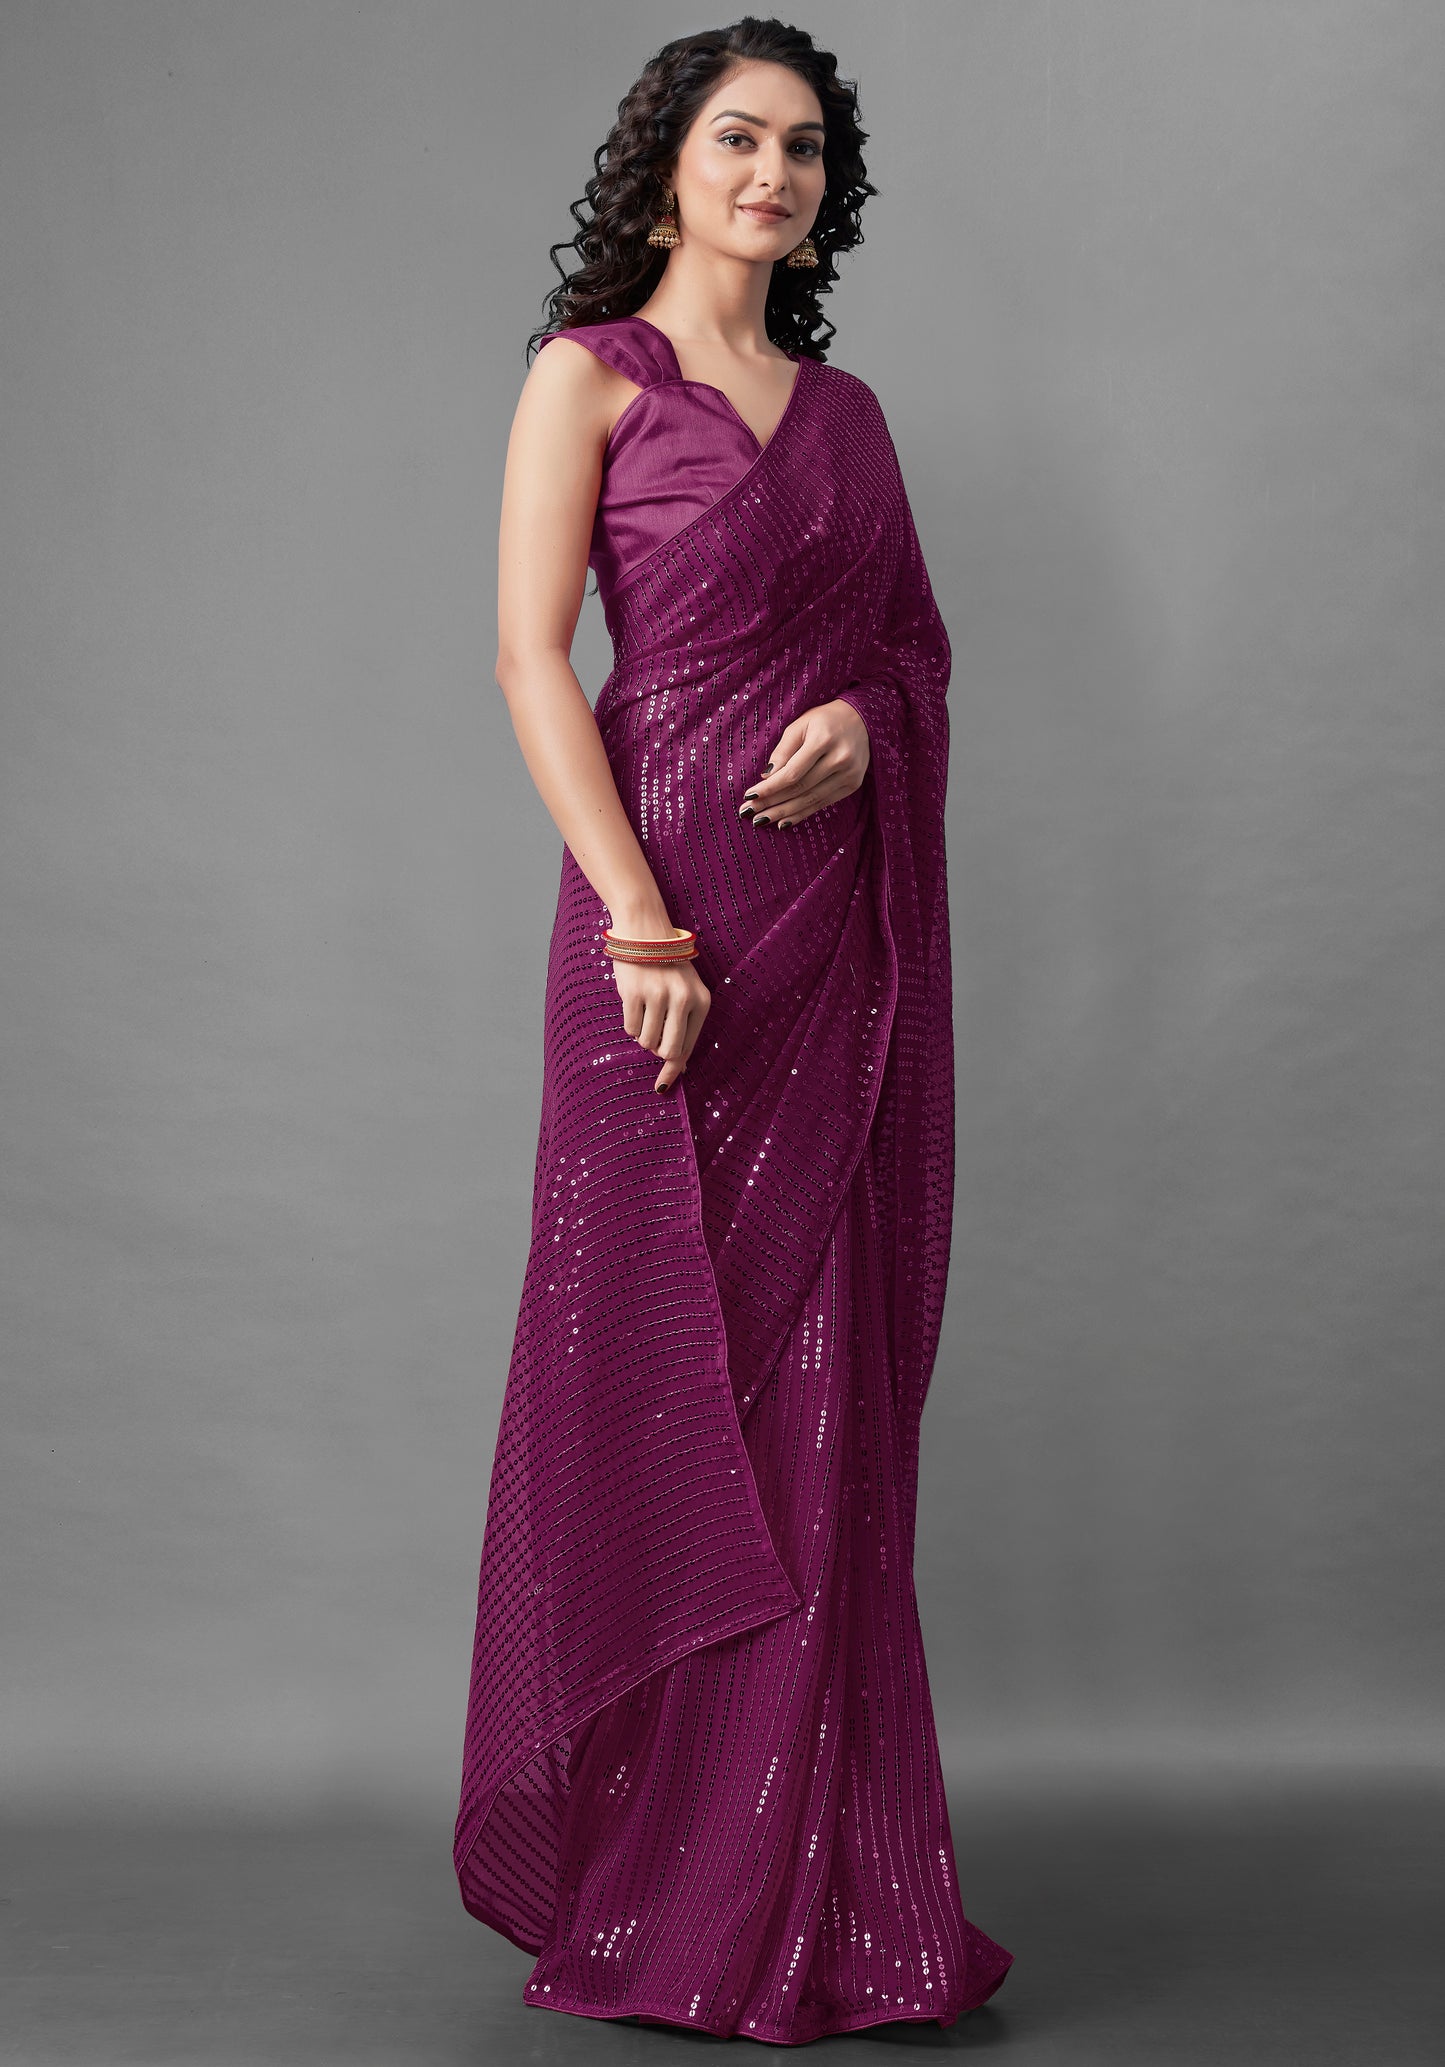 Buy Sequin Sarees online at Best Prices in India